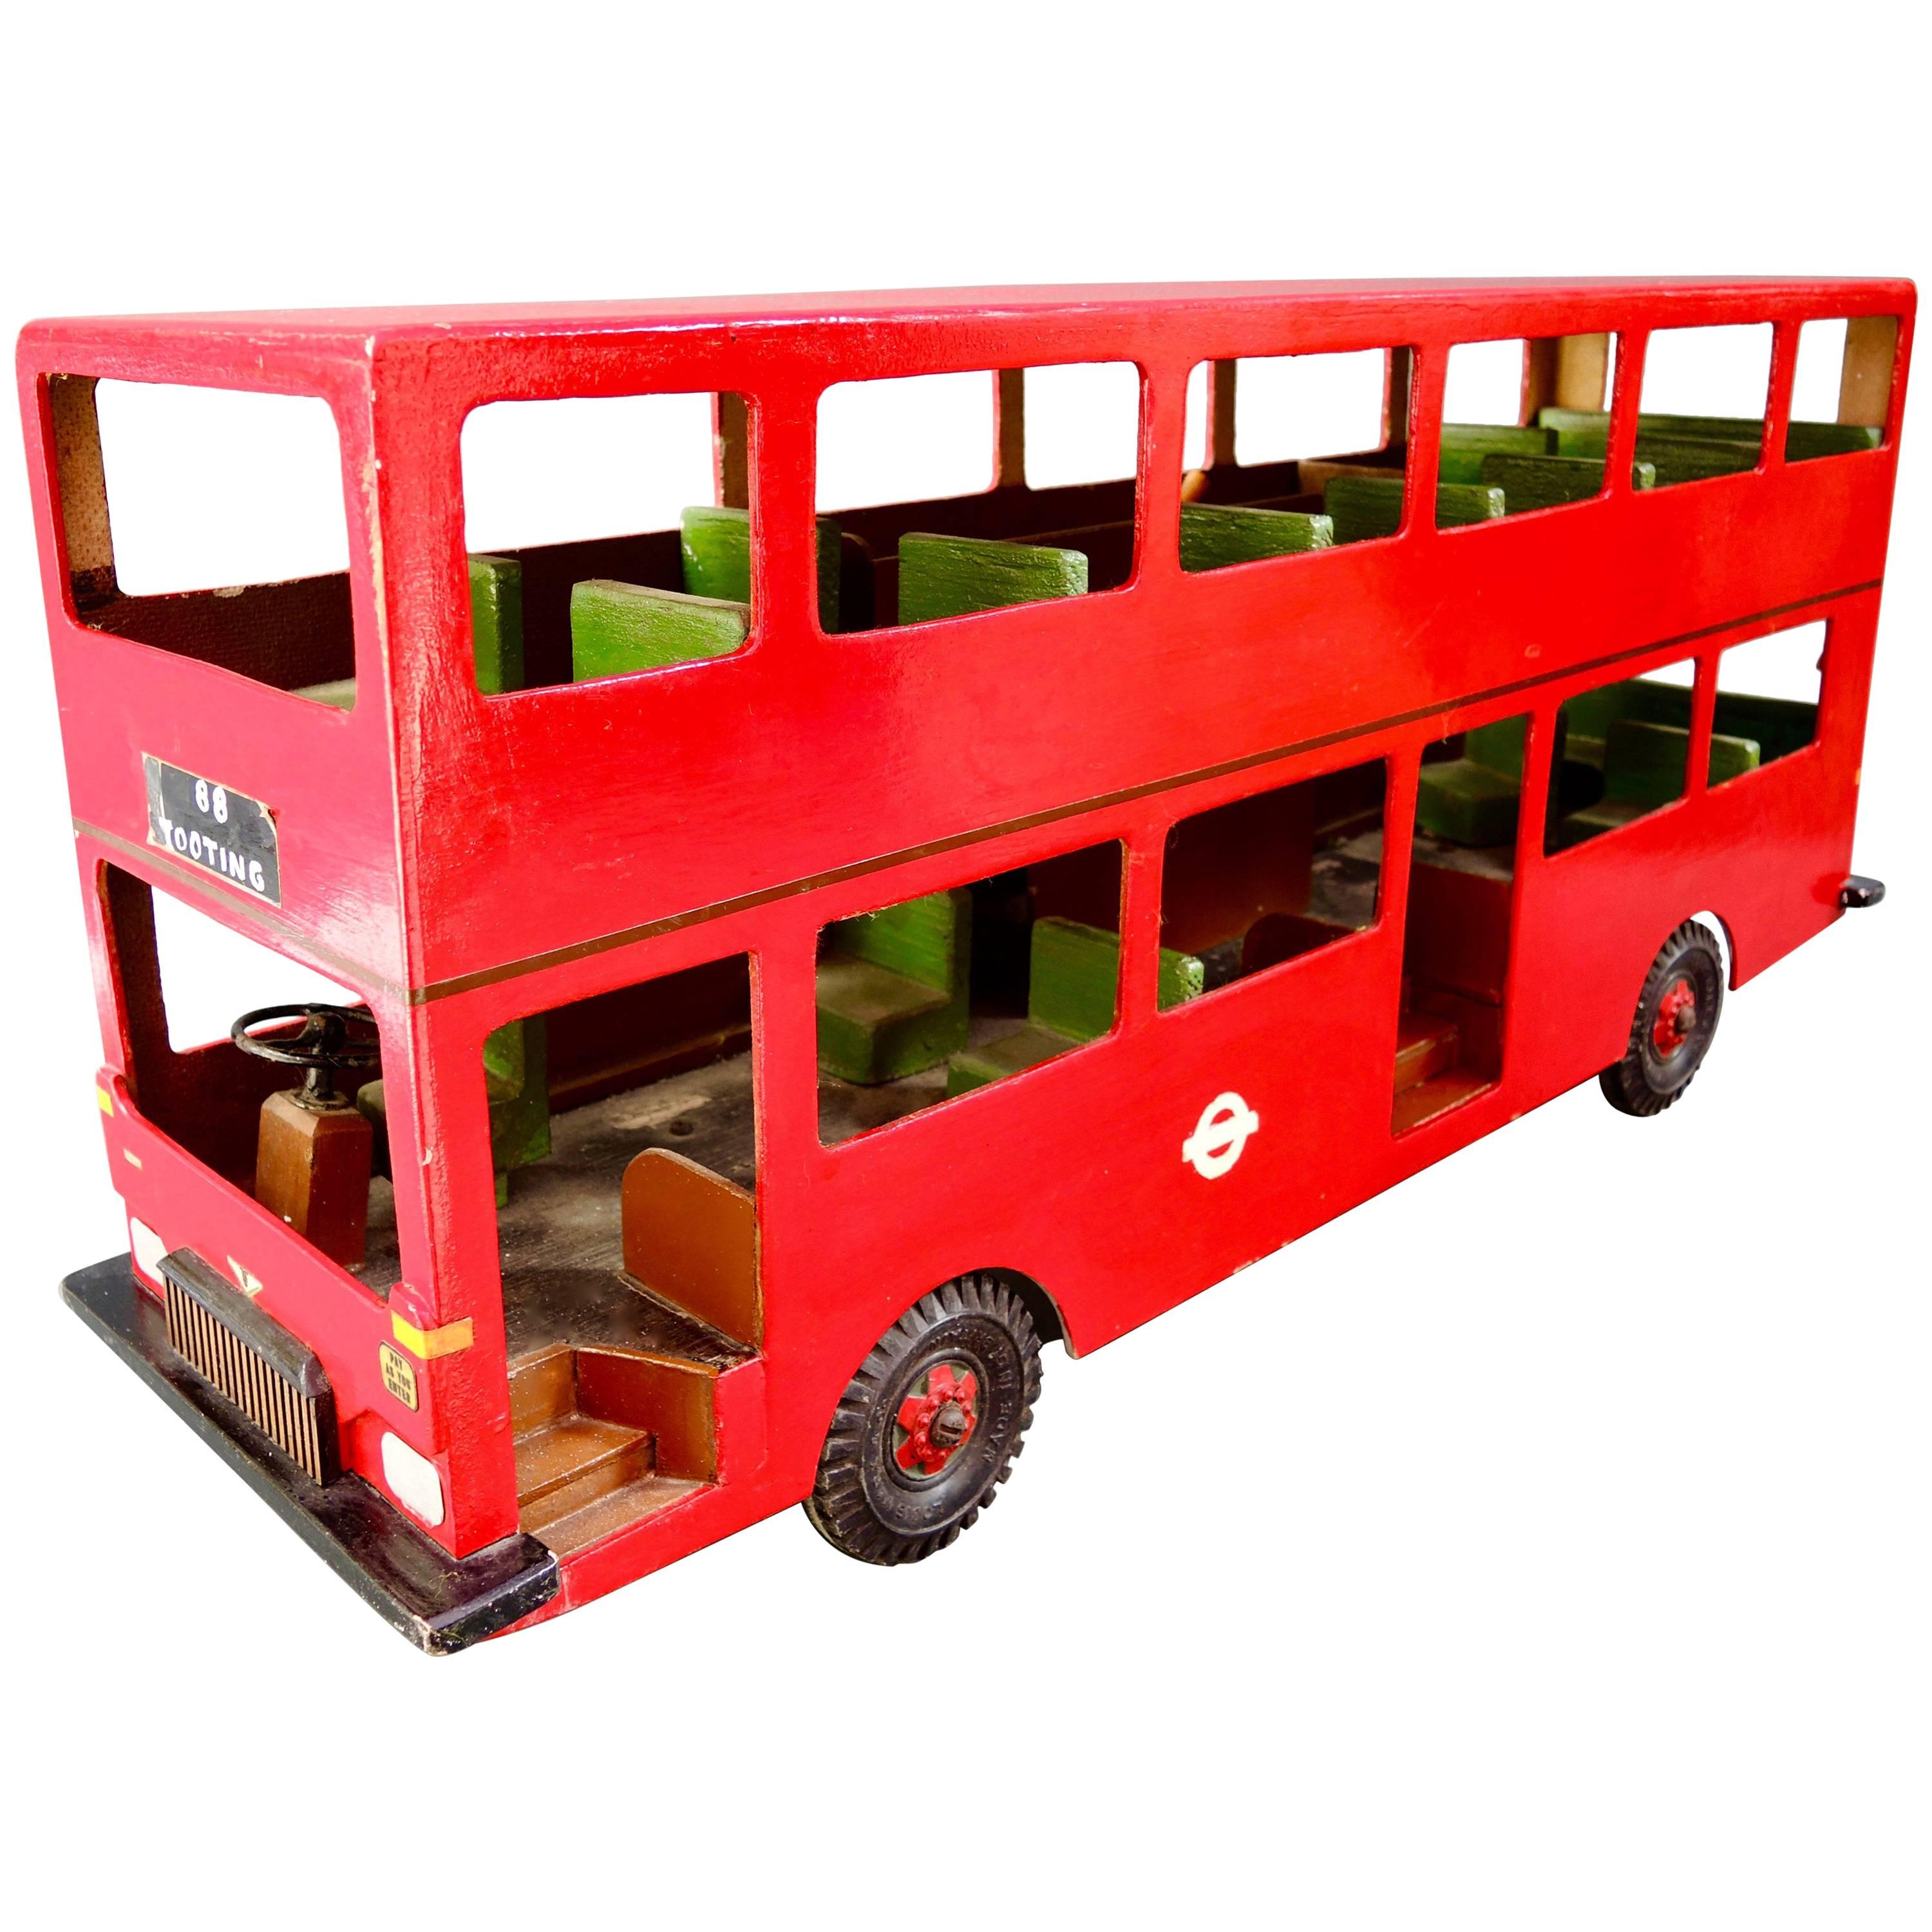 Vintage British Wooden Double Decker Bus Model/Toy